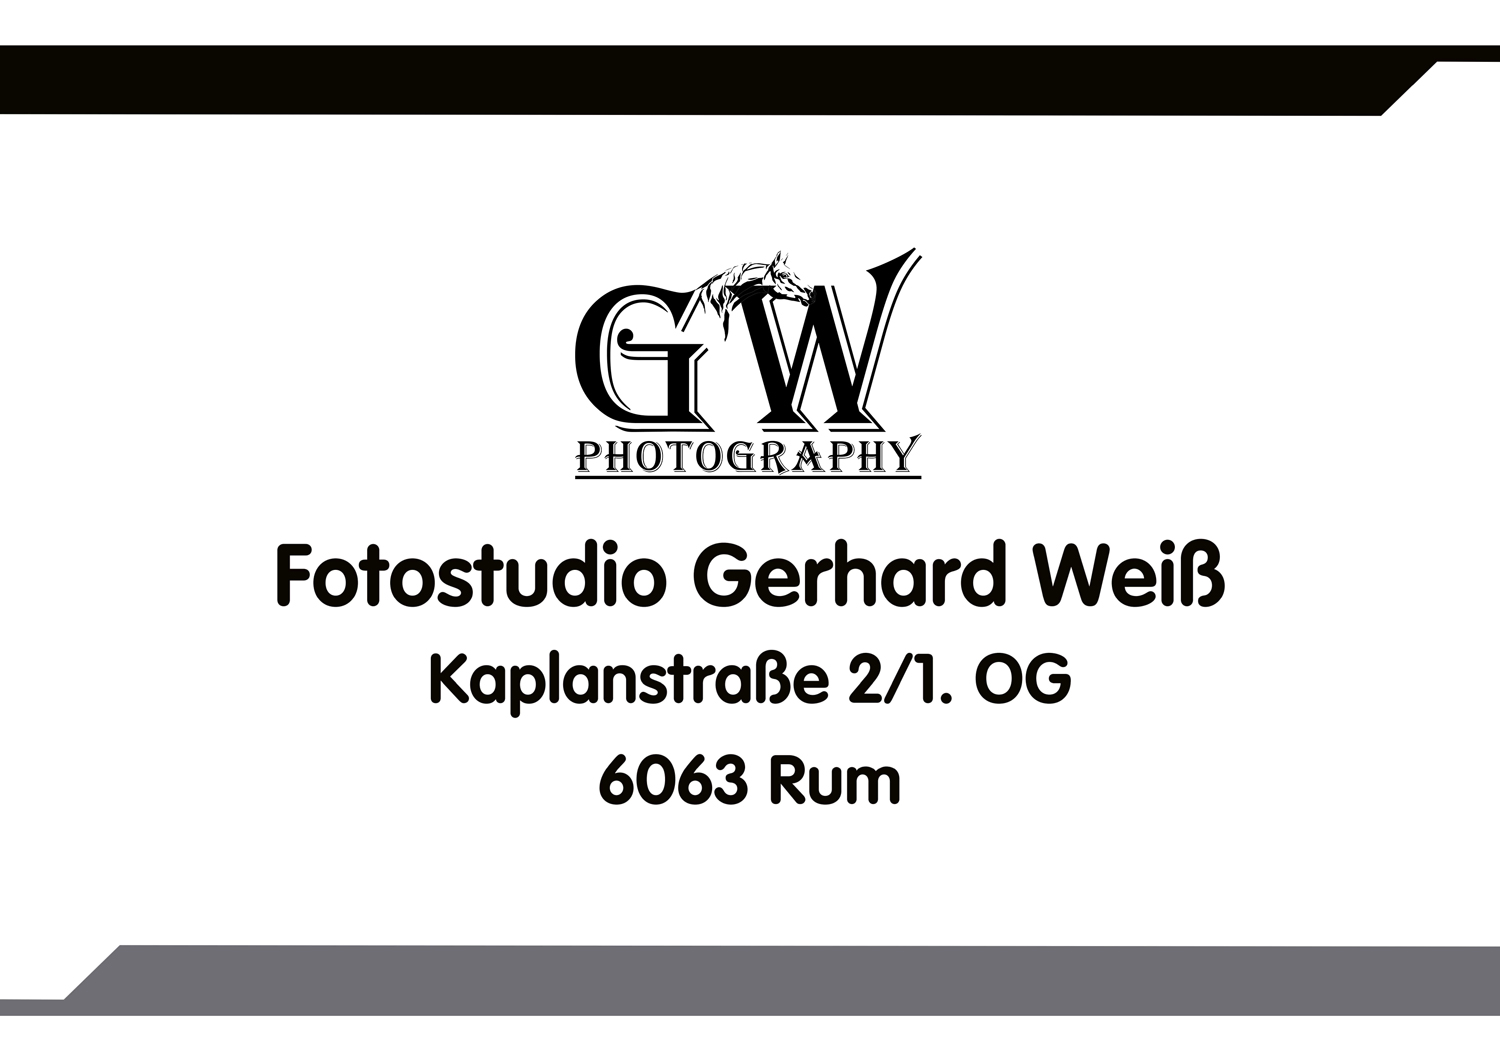 GWPhotography Studio Visitenkarten 2